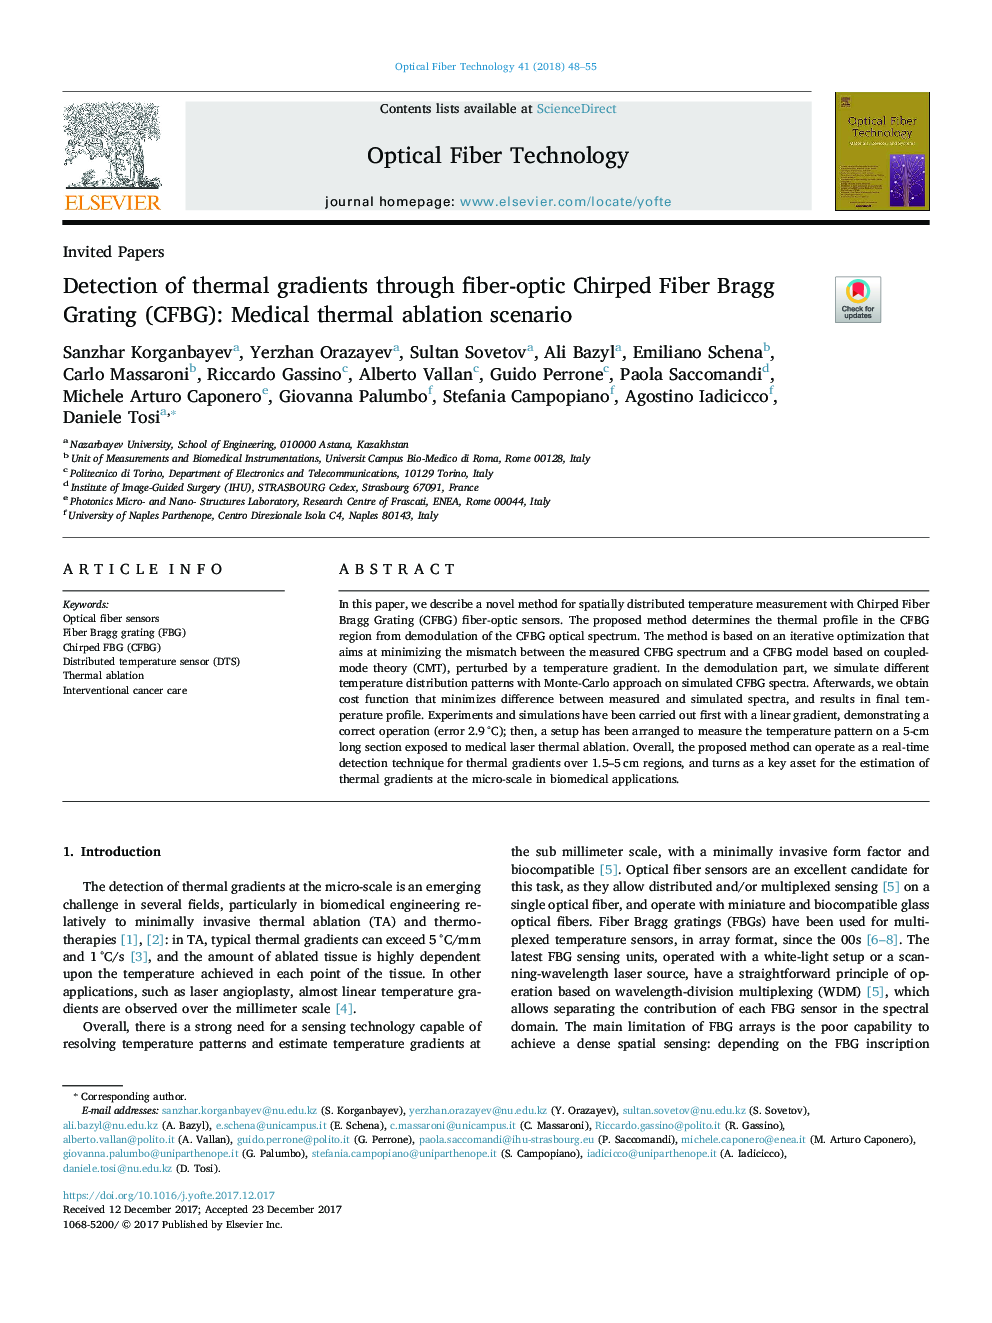 Detection of thermal gradients through fiber-optic Chirped Fiber Bragg Grating (CFBG): Medical thermal ablation scenario